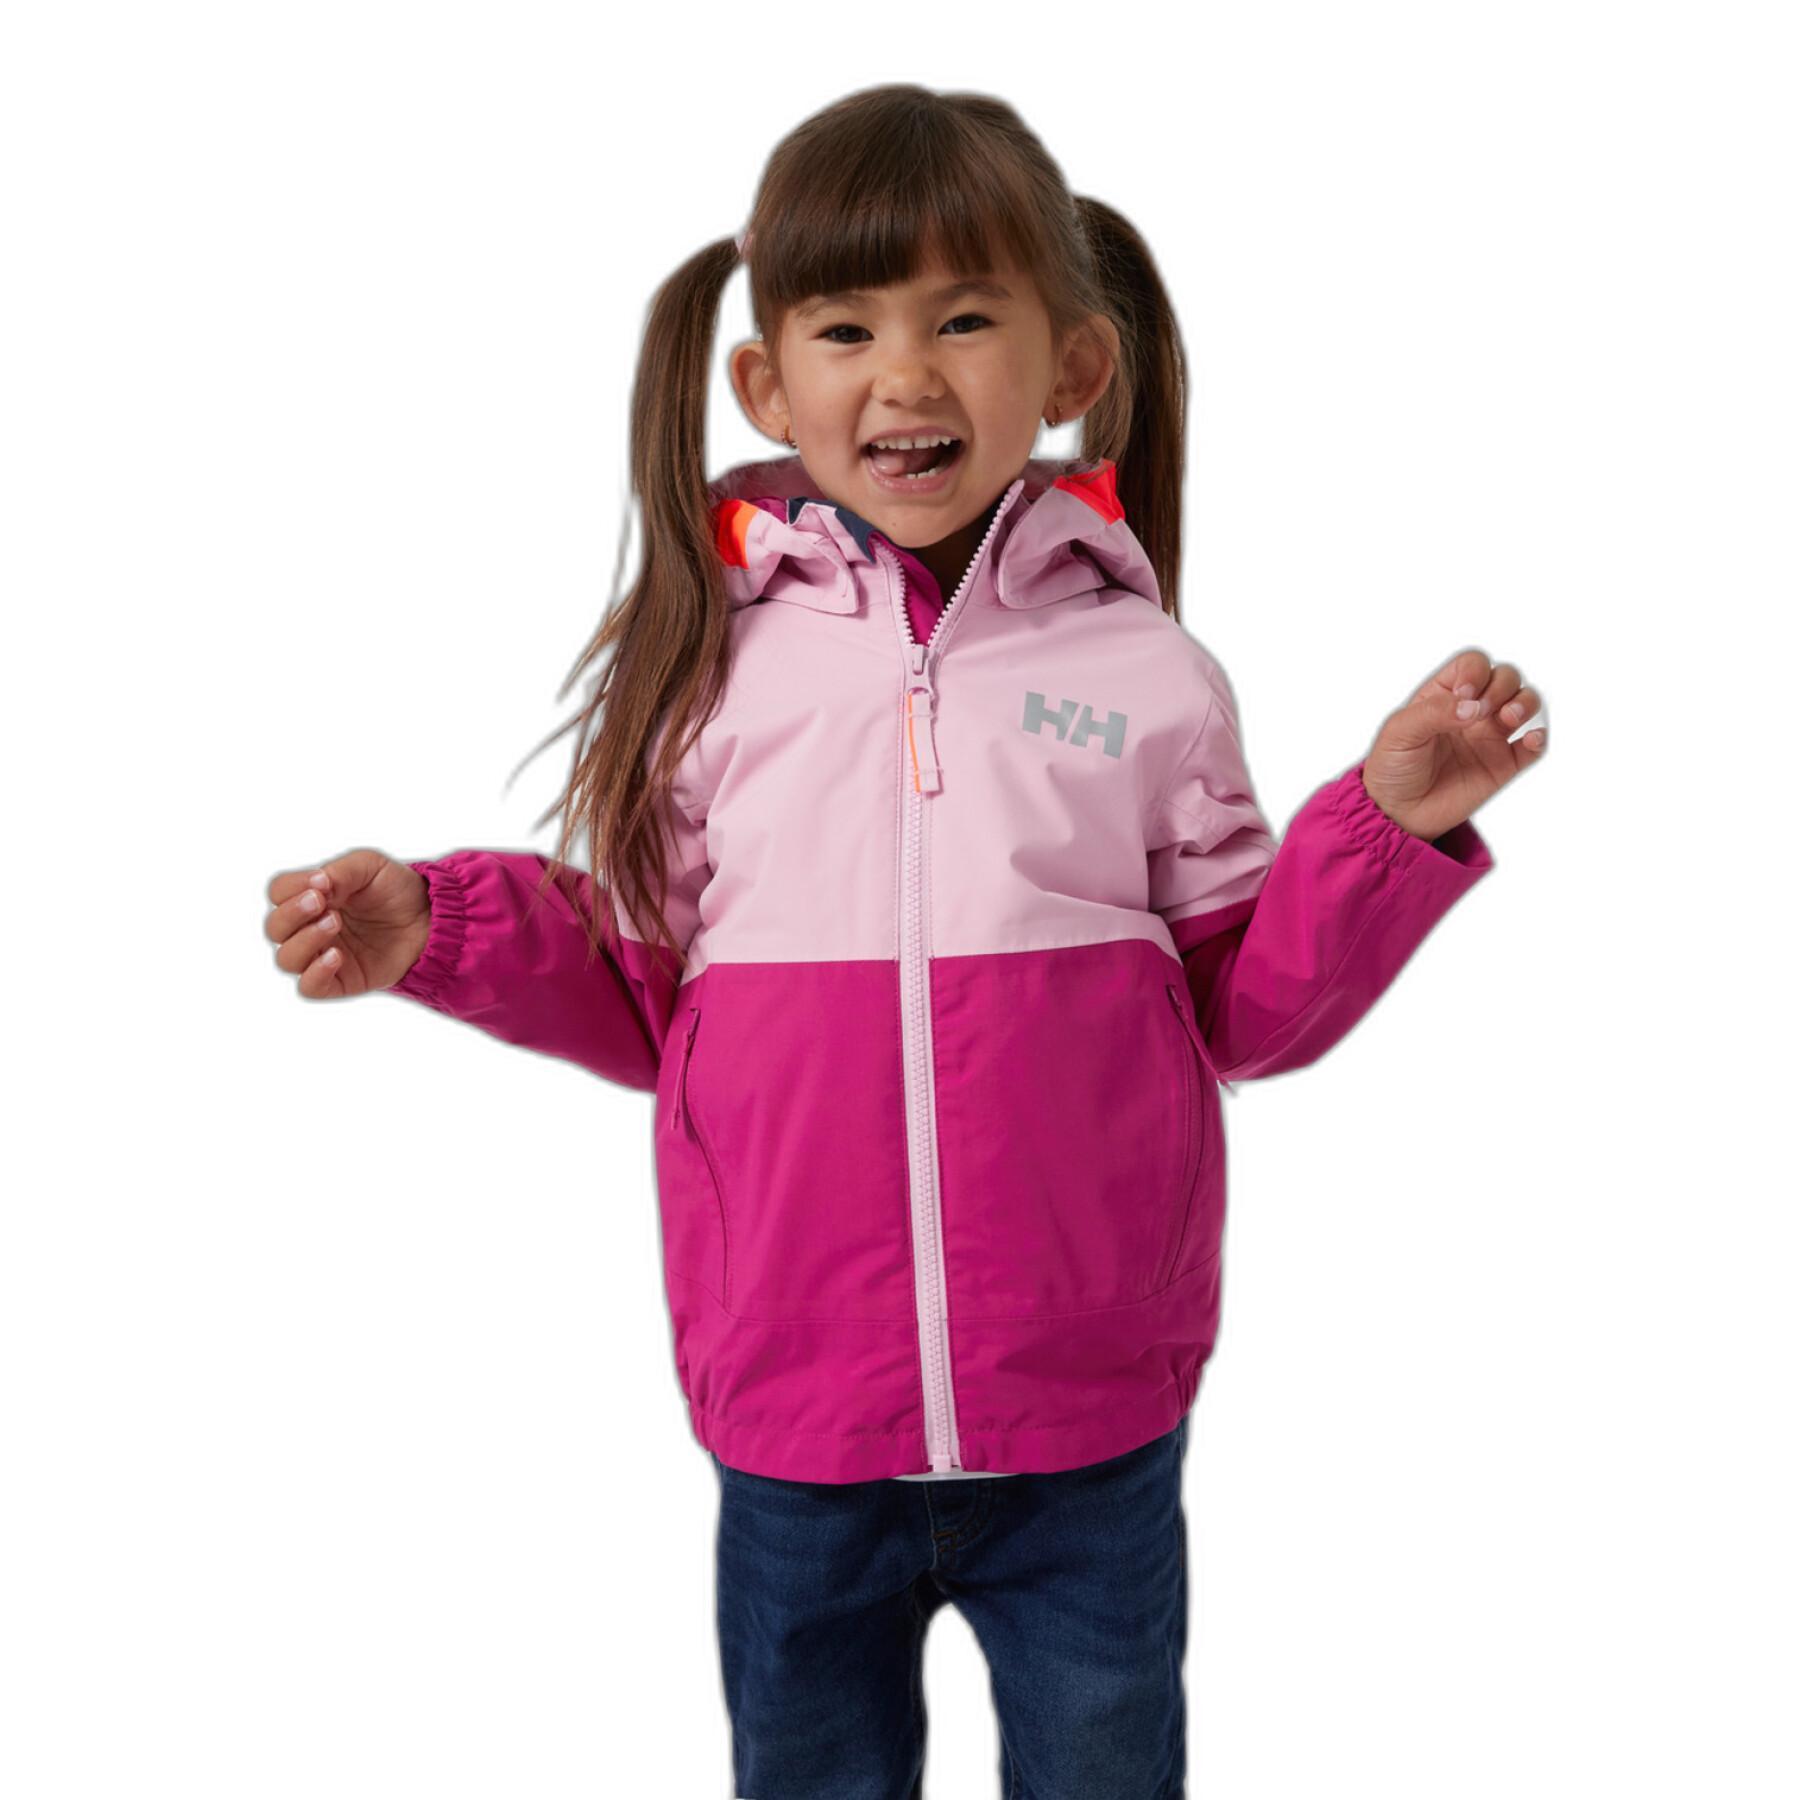 Waterproof jacket for children Helly Hansen K Sogn